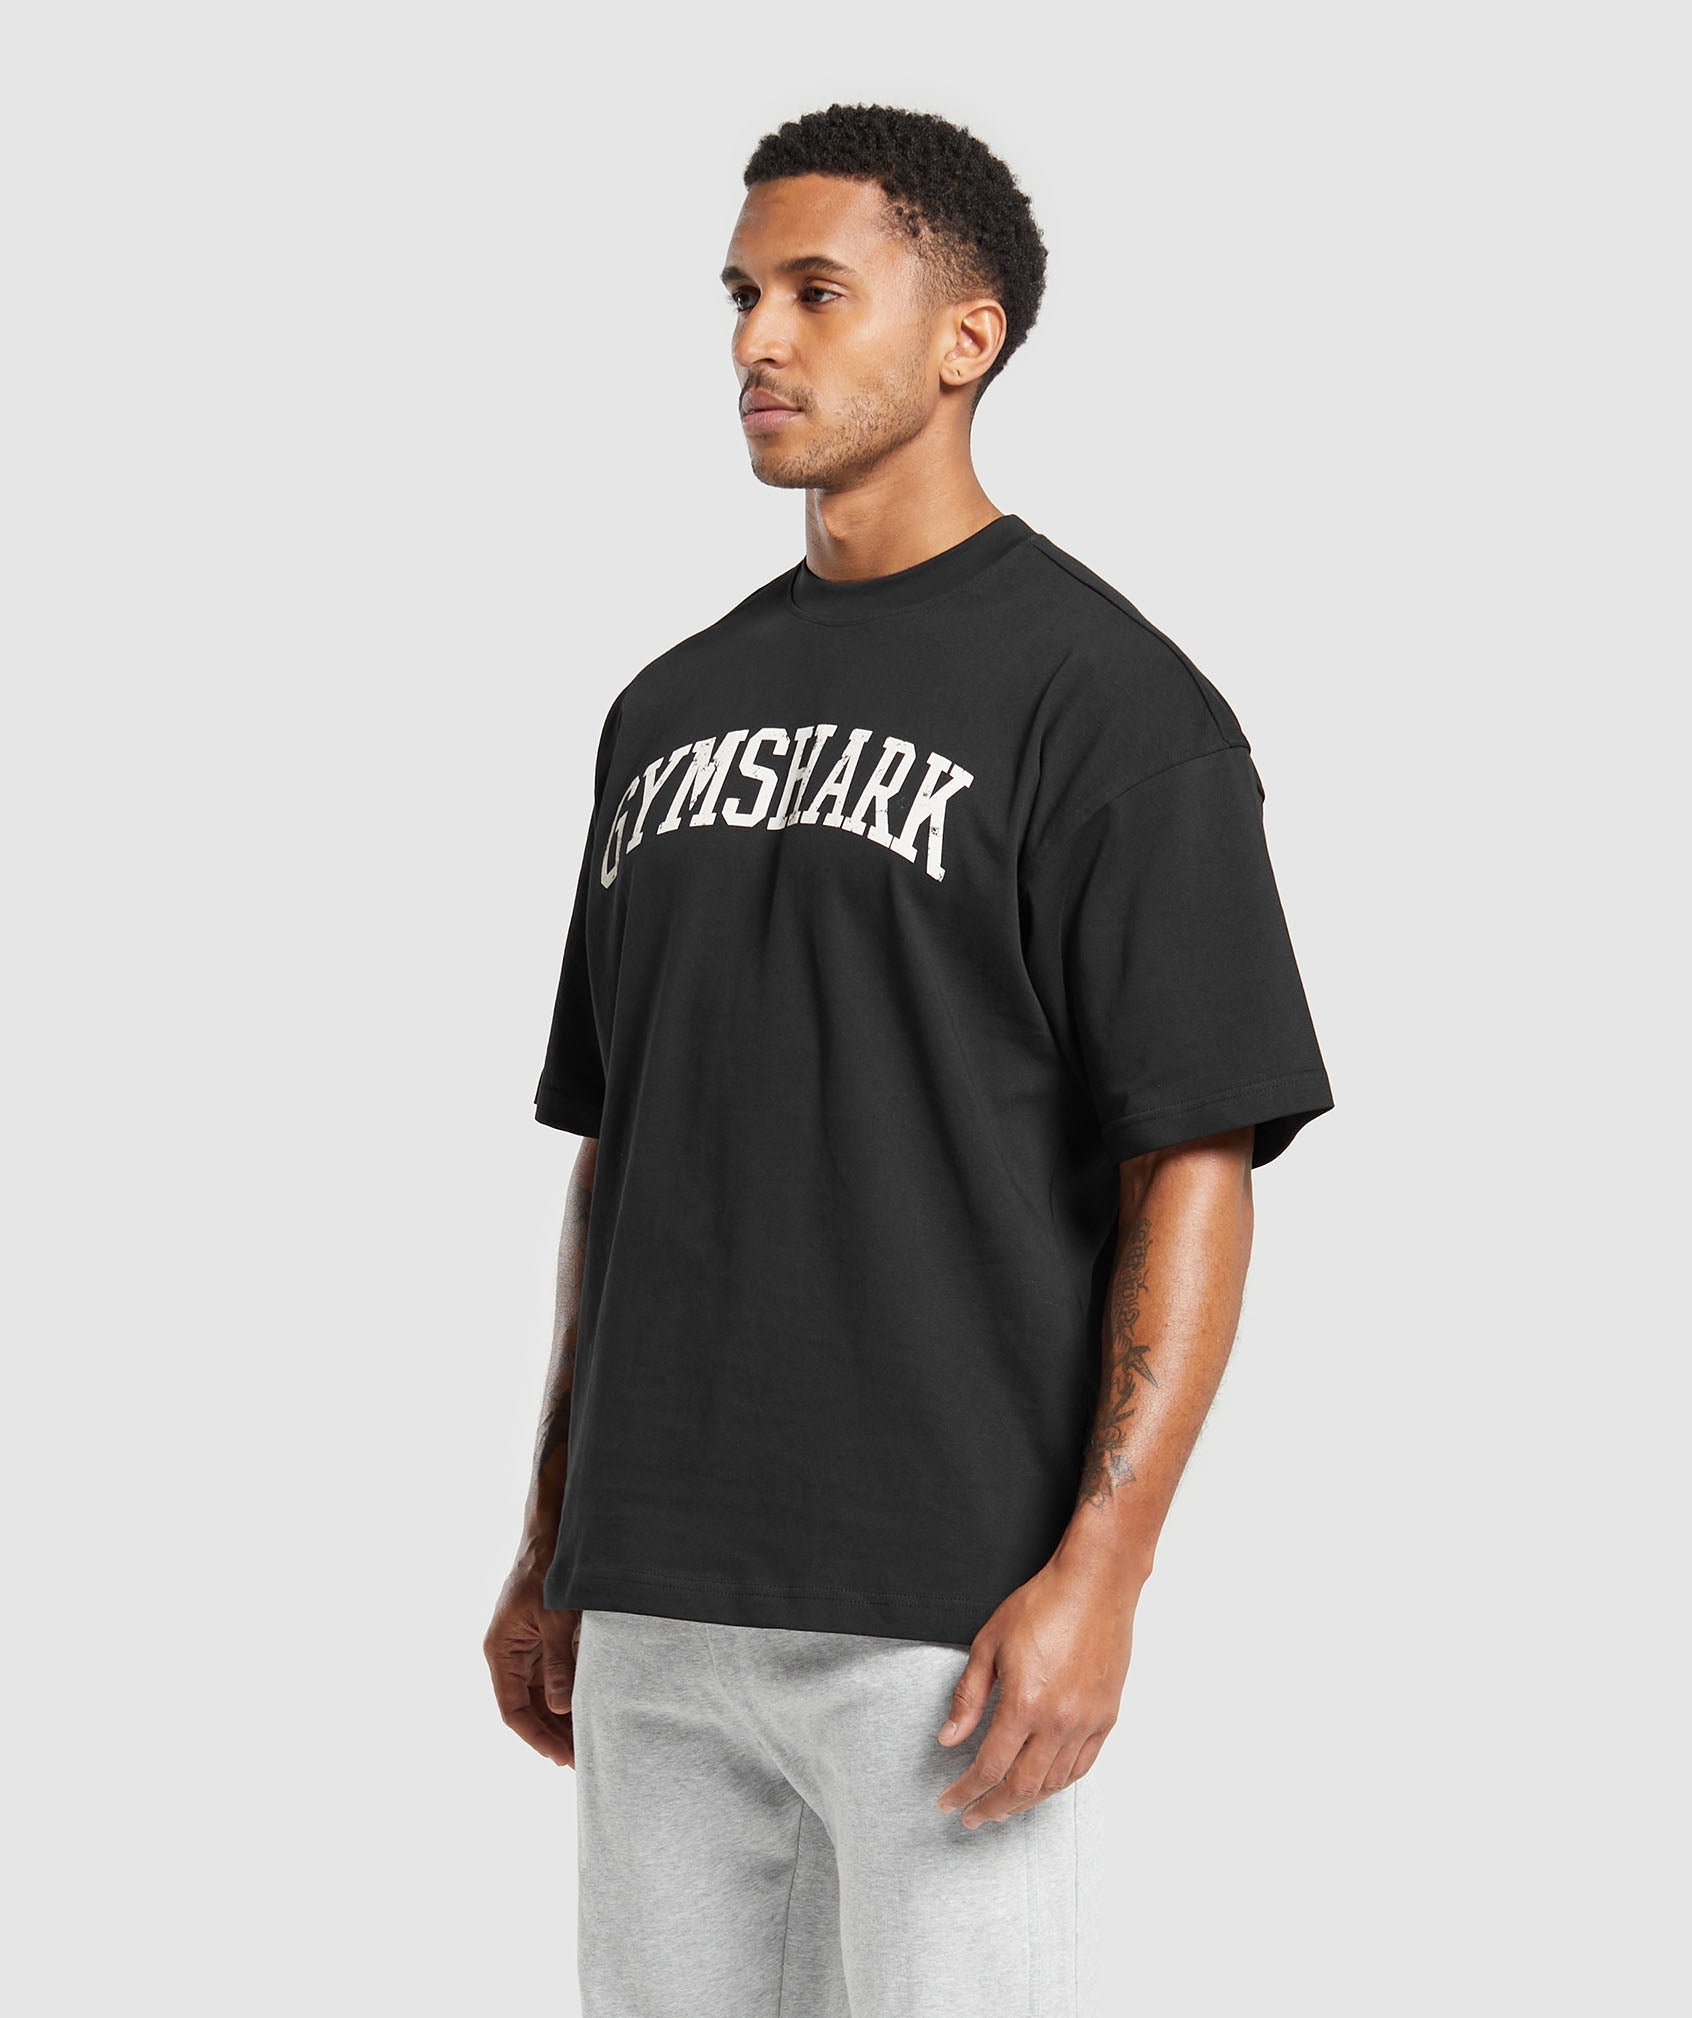 Collegiate T-Shirt in Black - view 3